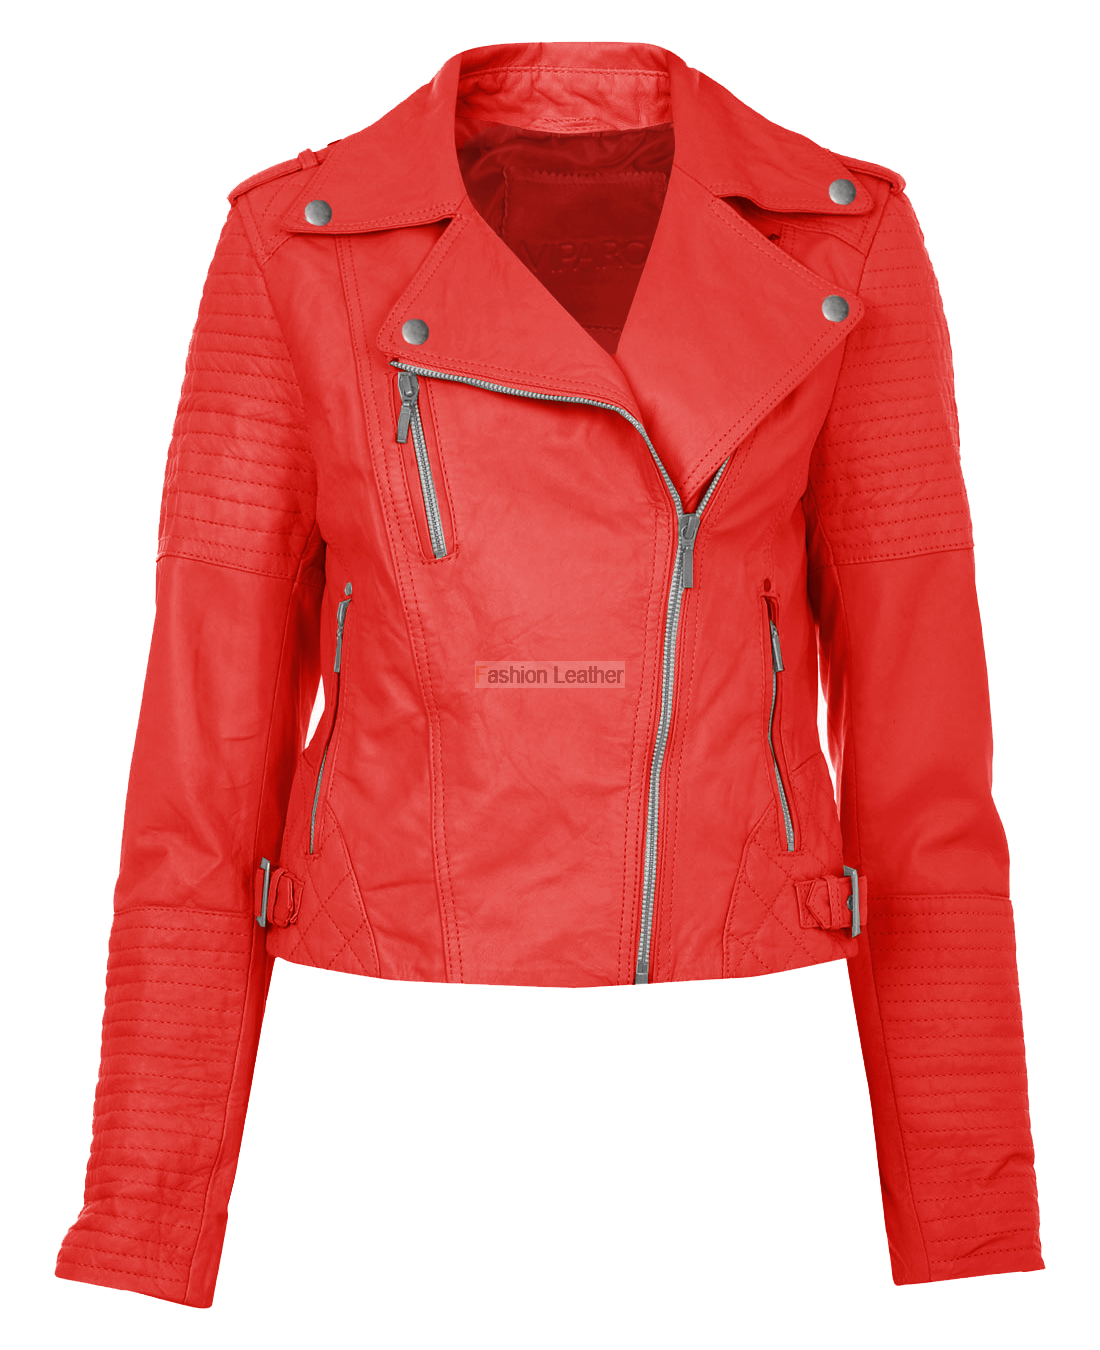 Leather Red Jacket PNG Transparent Image